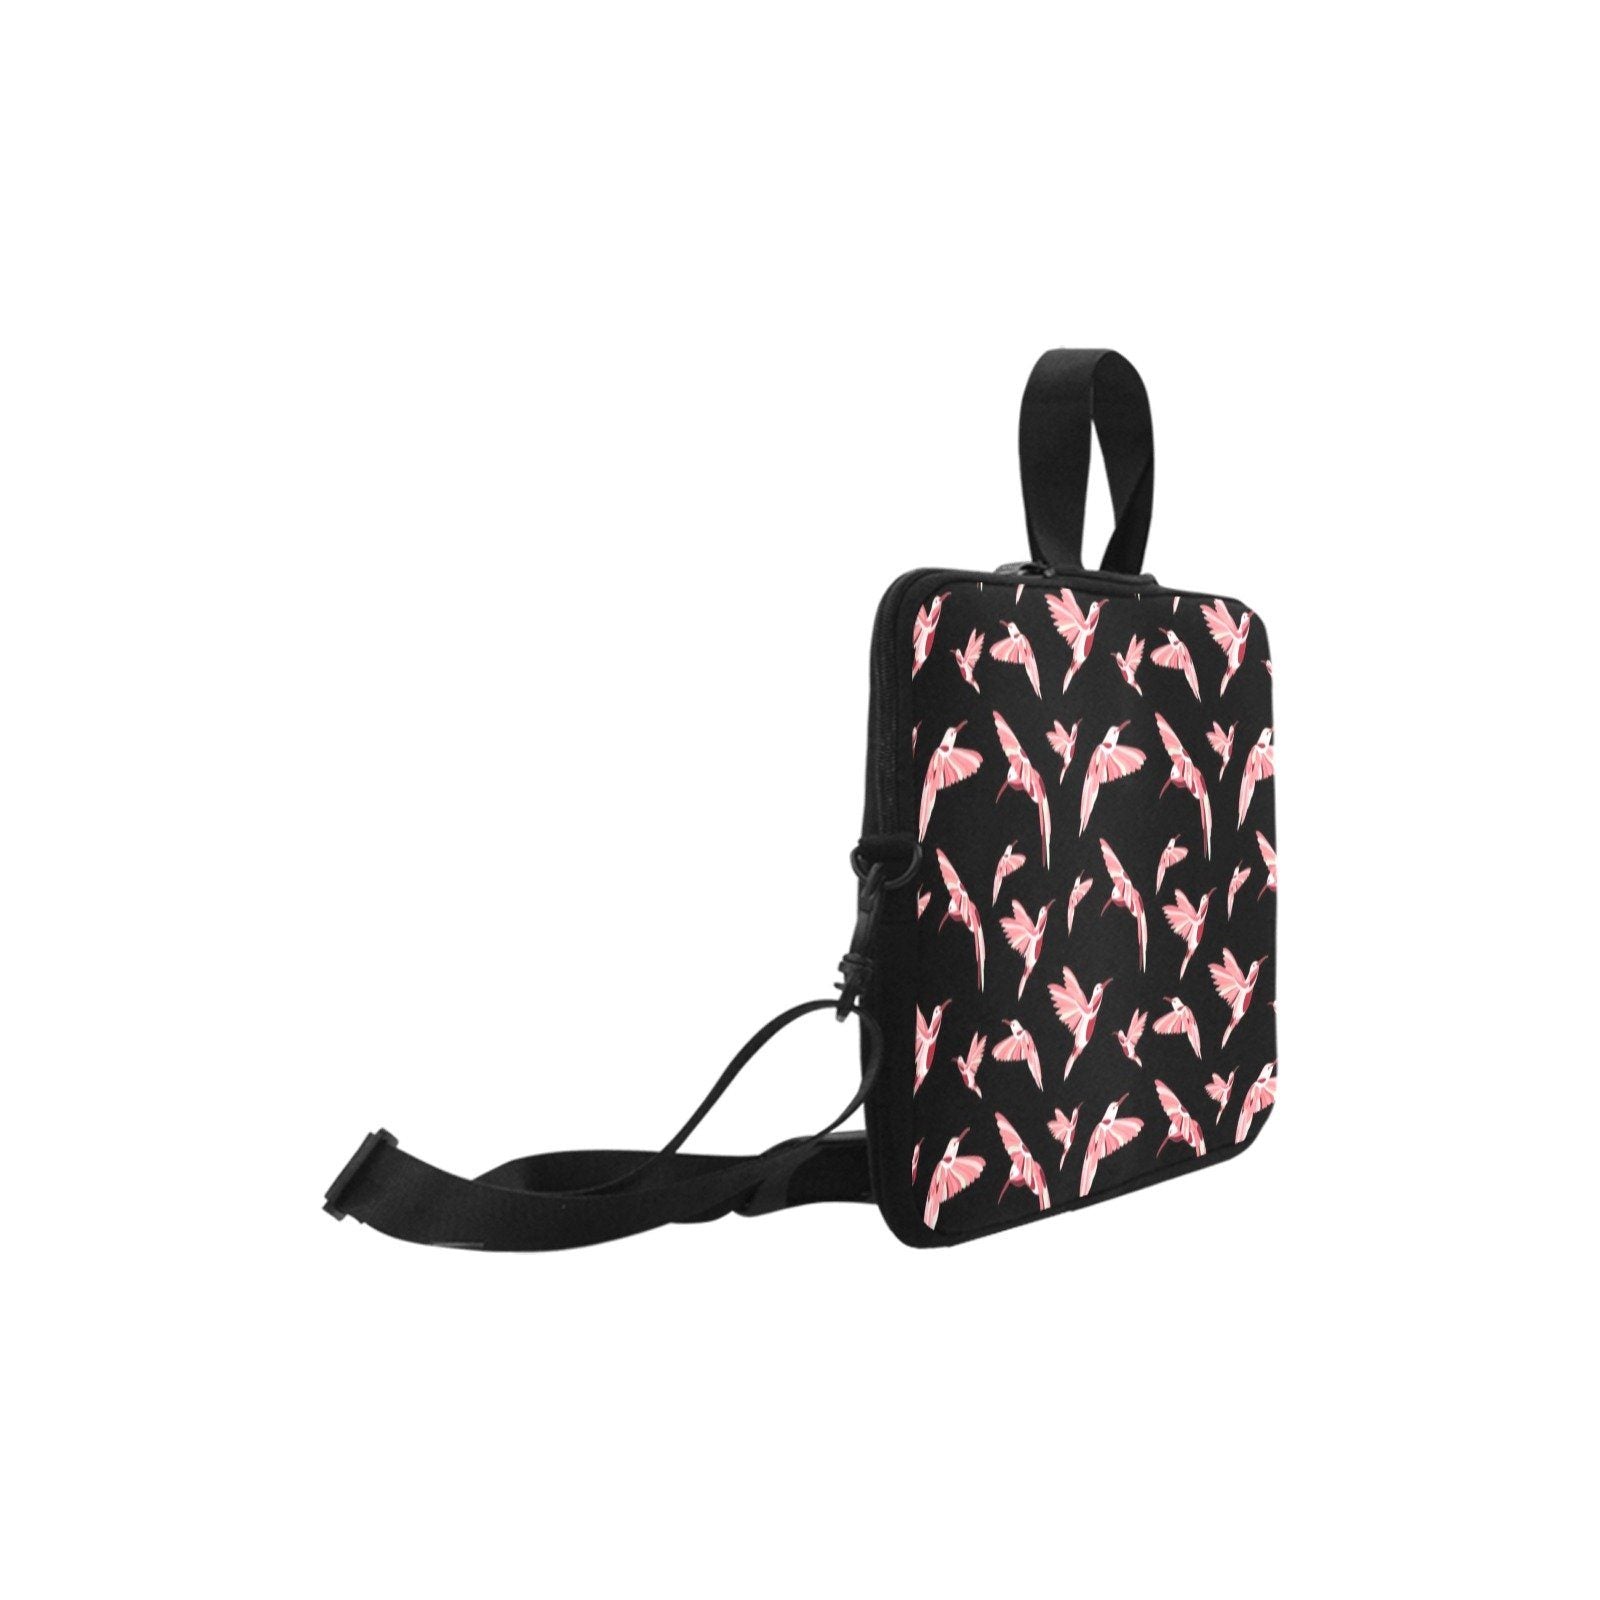 Strawberry Black Laptop Handbags 11" bag e-joyer 